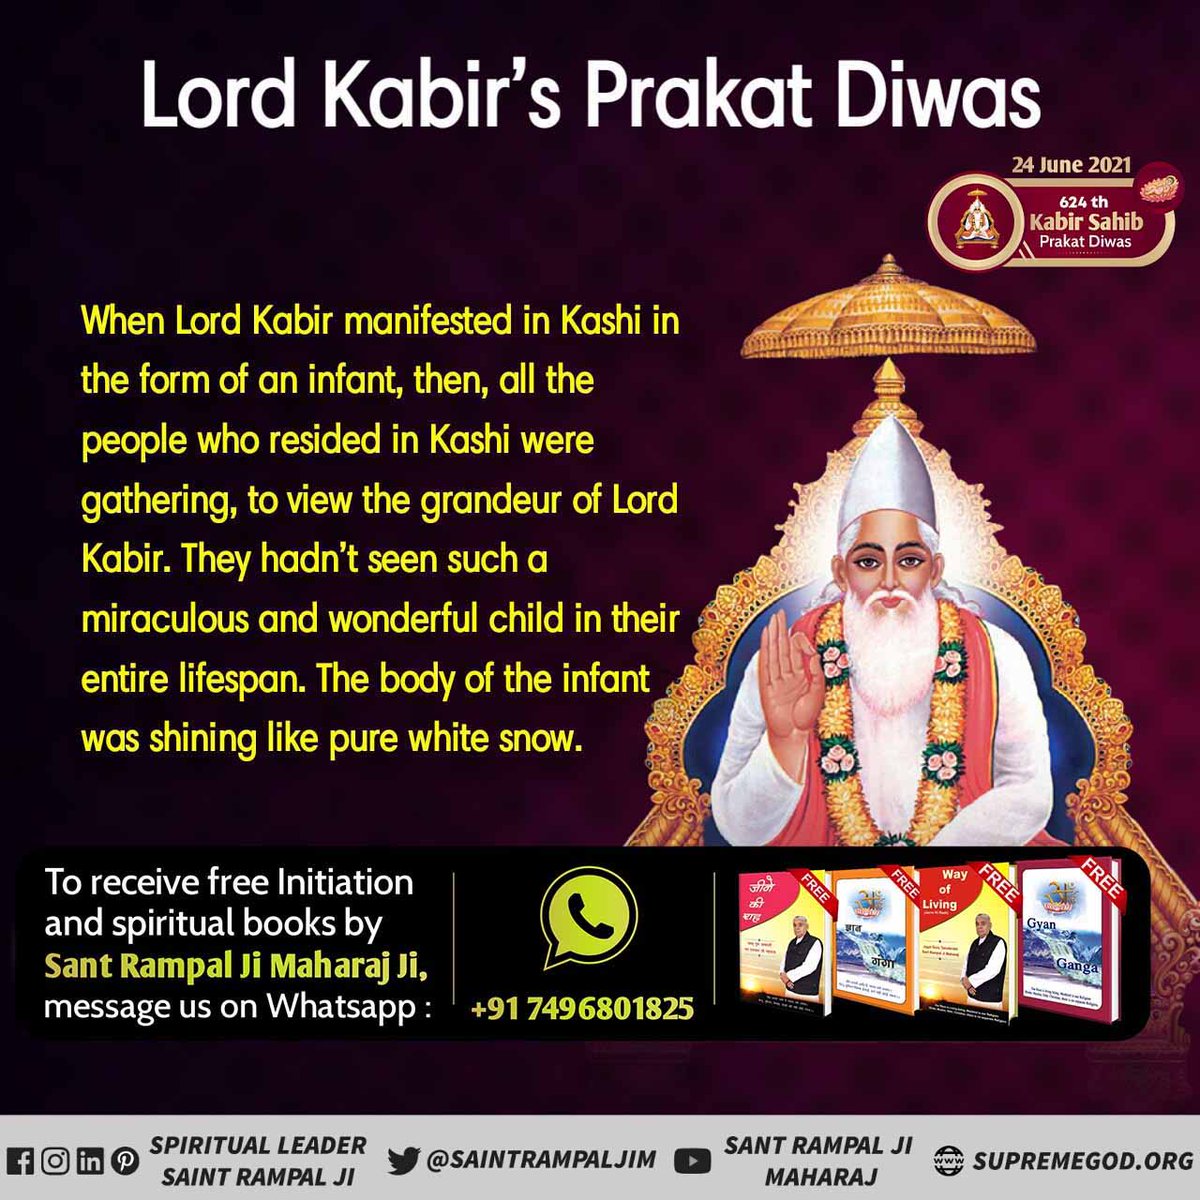 #624वां_कबीरसाहेब_प्रकट दिवस #संतरामपालजीमहाराज 624 years back, lord kabir descended and appeared on the pious land of kashi, india. Lord Kabir himself came from his immortal land of Satlok. Visit satlok ashram youtube channel. @SaintRampalJiM